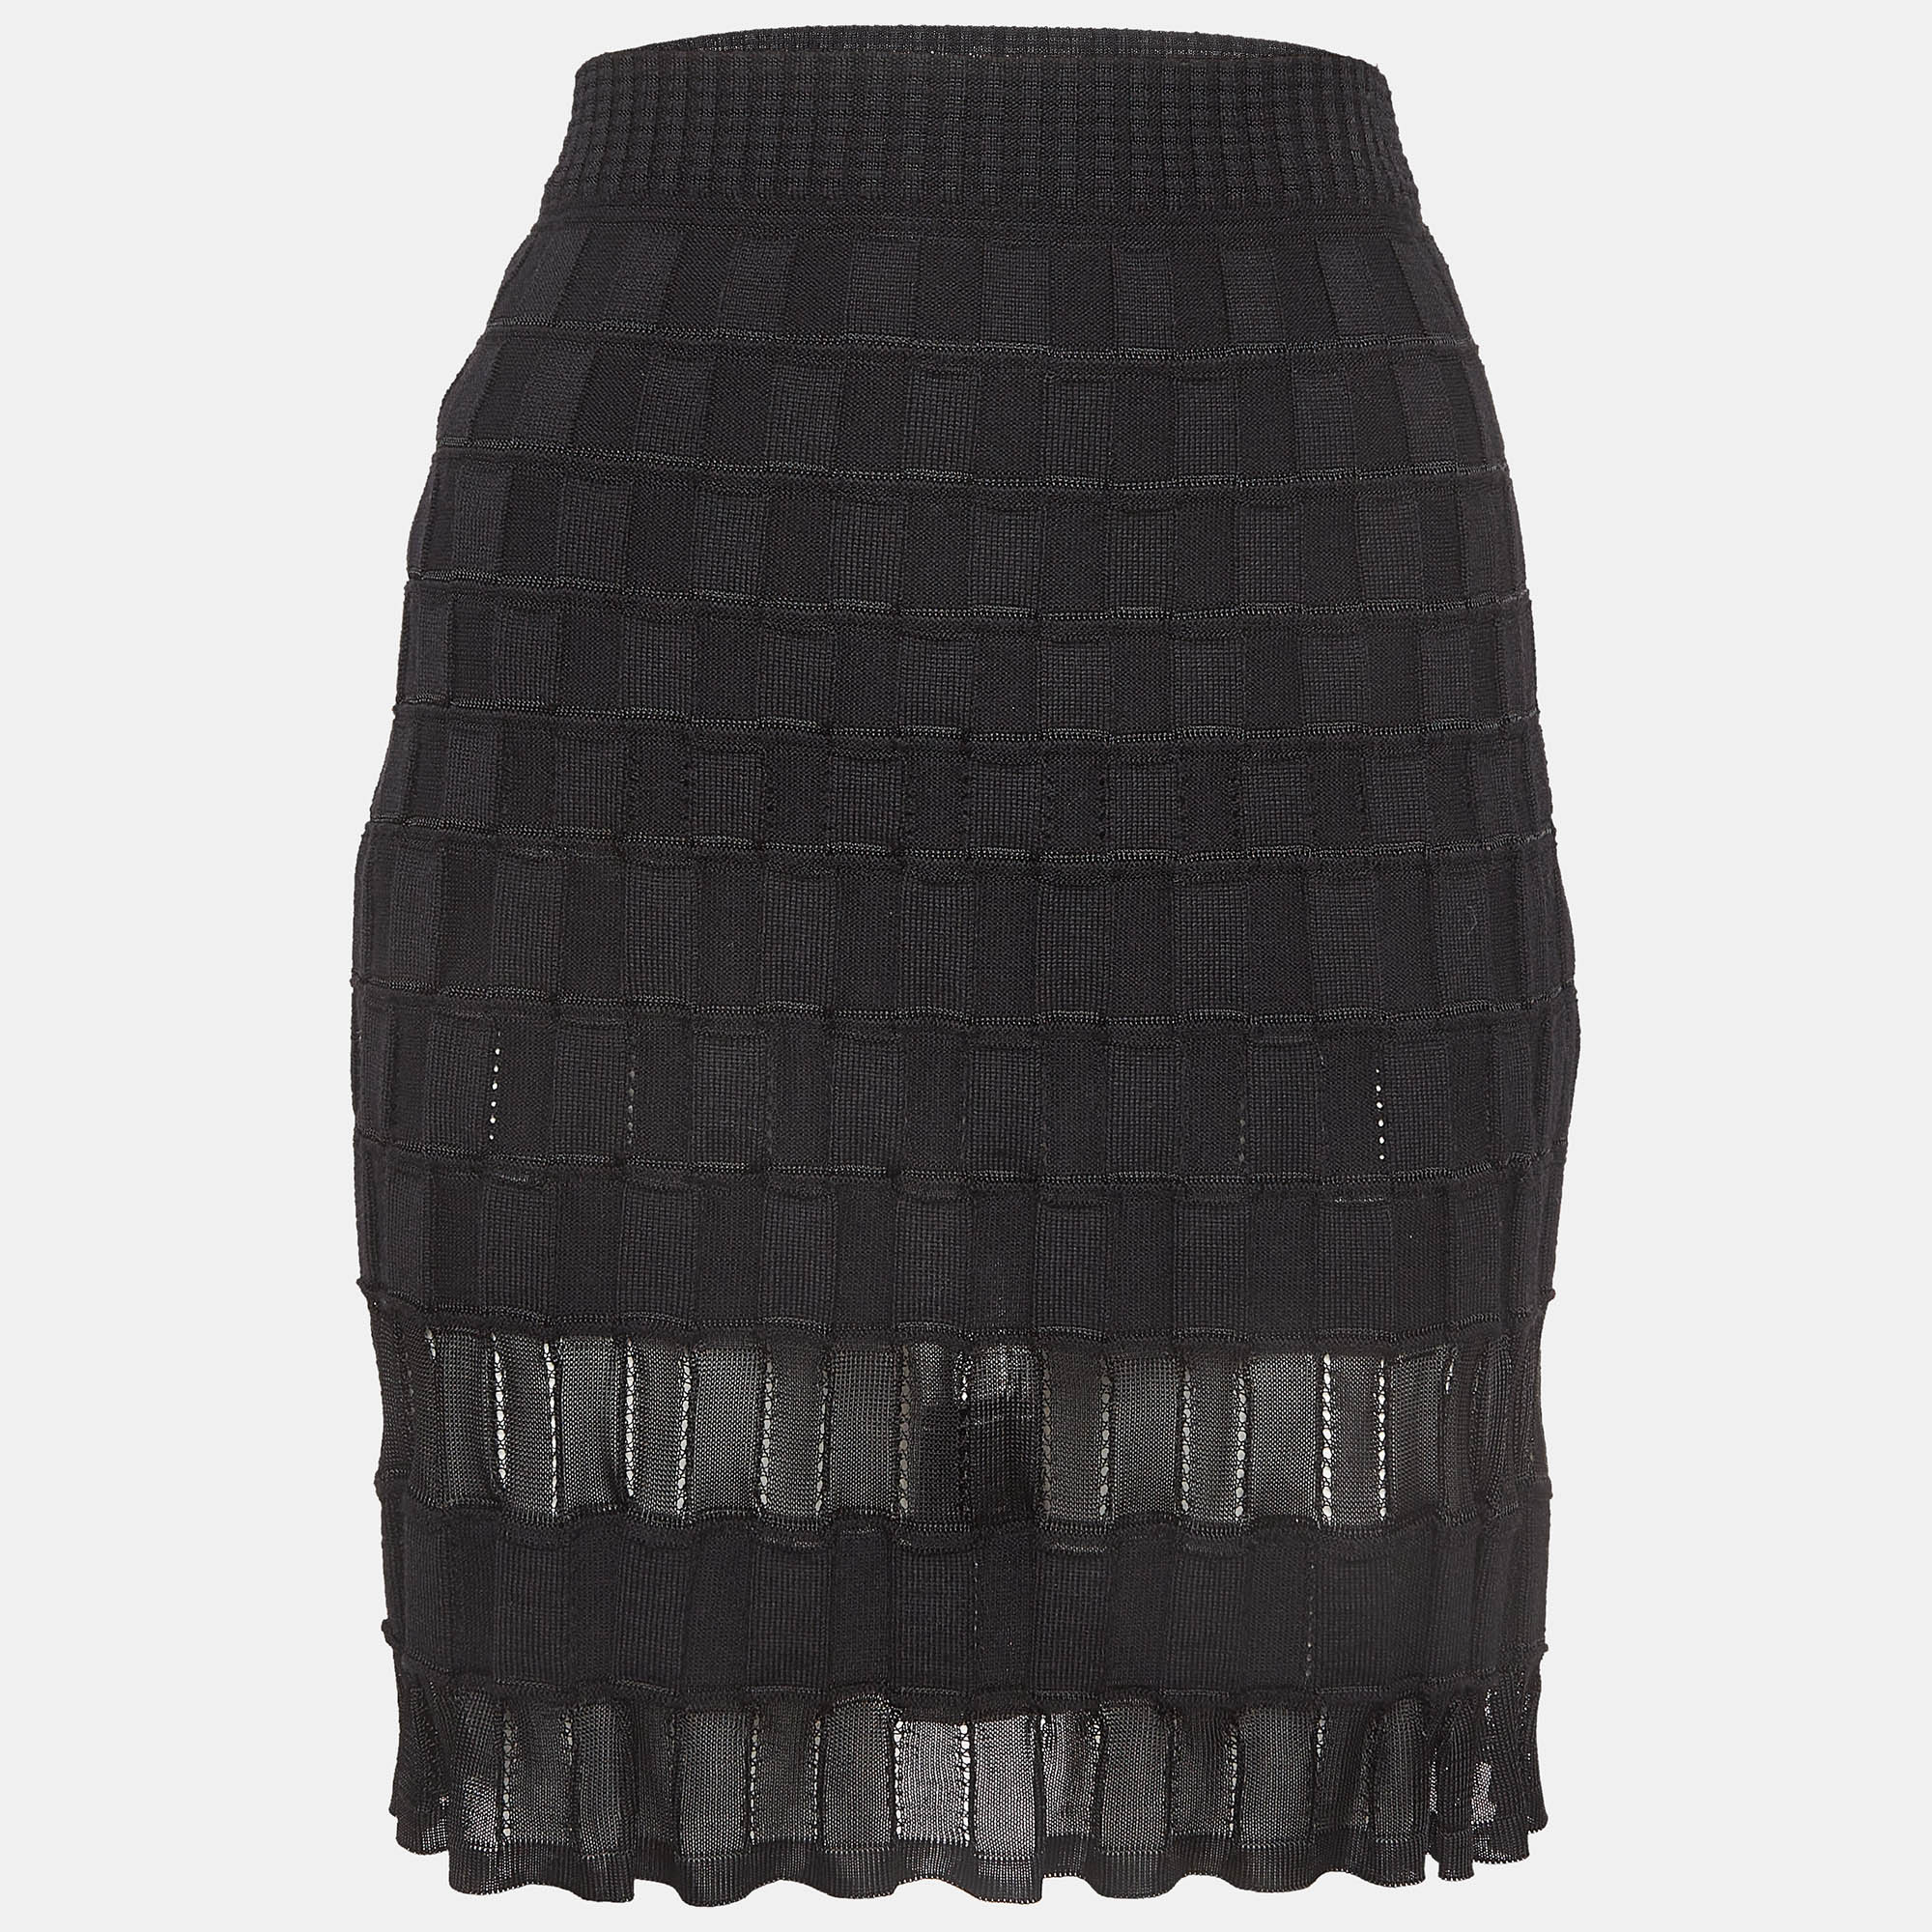 

M Missoni Black Patterned Knit Knee Length Skirt M